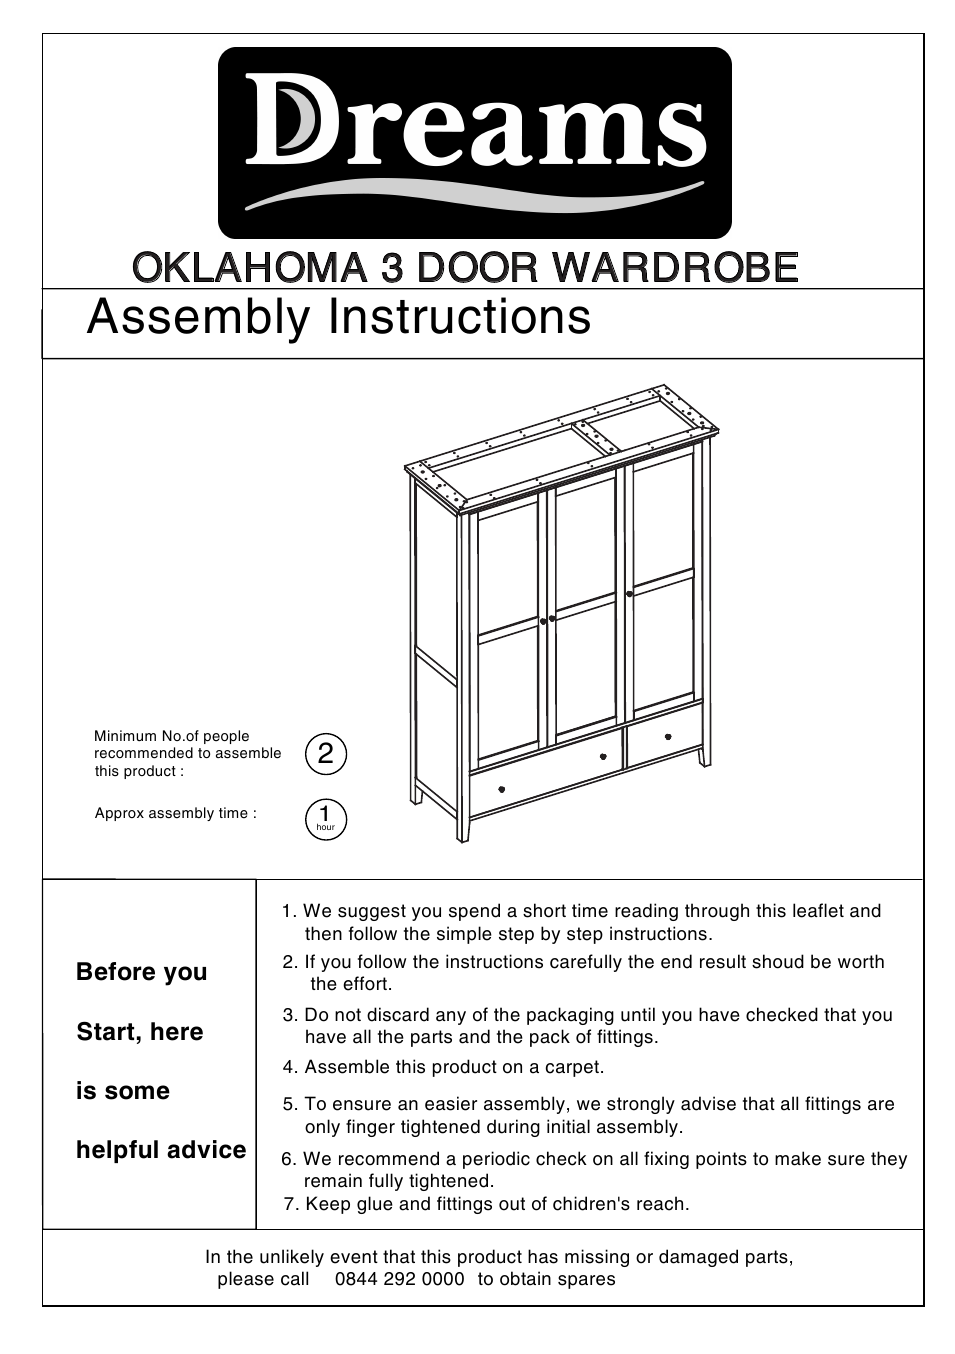 Oklahoma 3 Door Wardrobe with Drawers